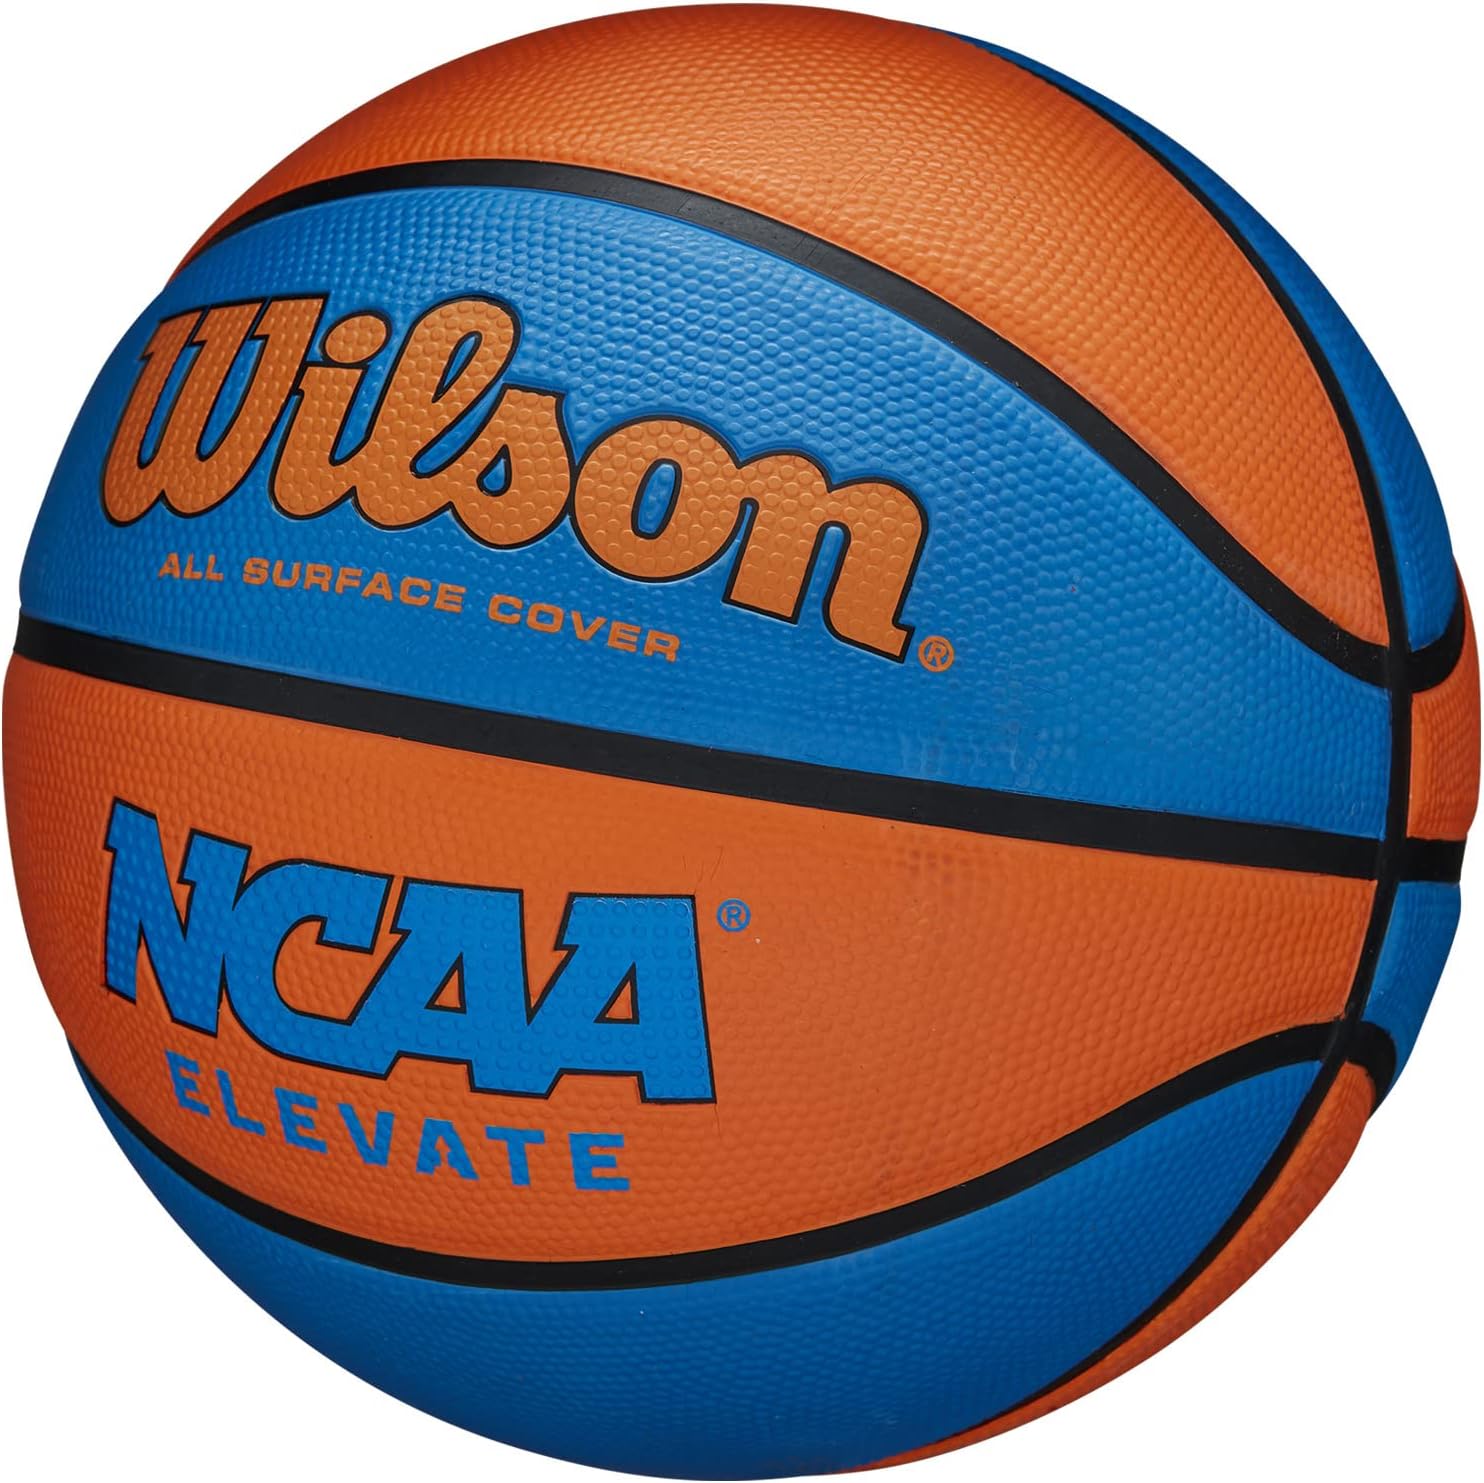 WILSON NCAA Elevate Basketball - Options: Orange Size 5 (27.5"), Green/Navy Size 6 (28.5") and Royal/Orange Size 5 (27.5")